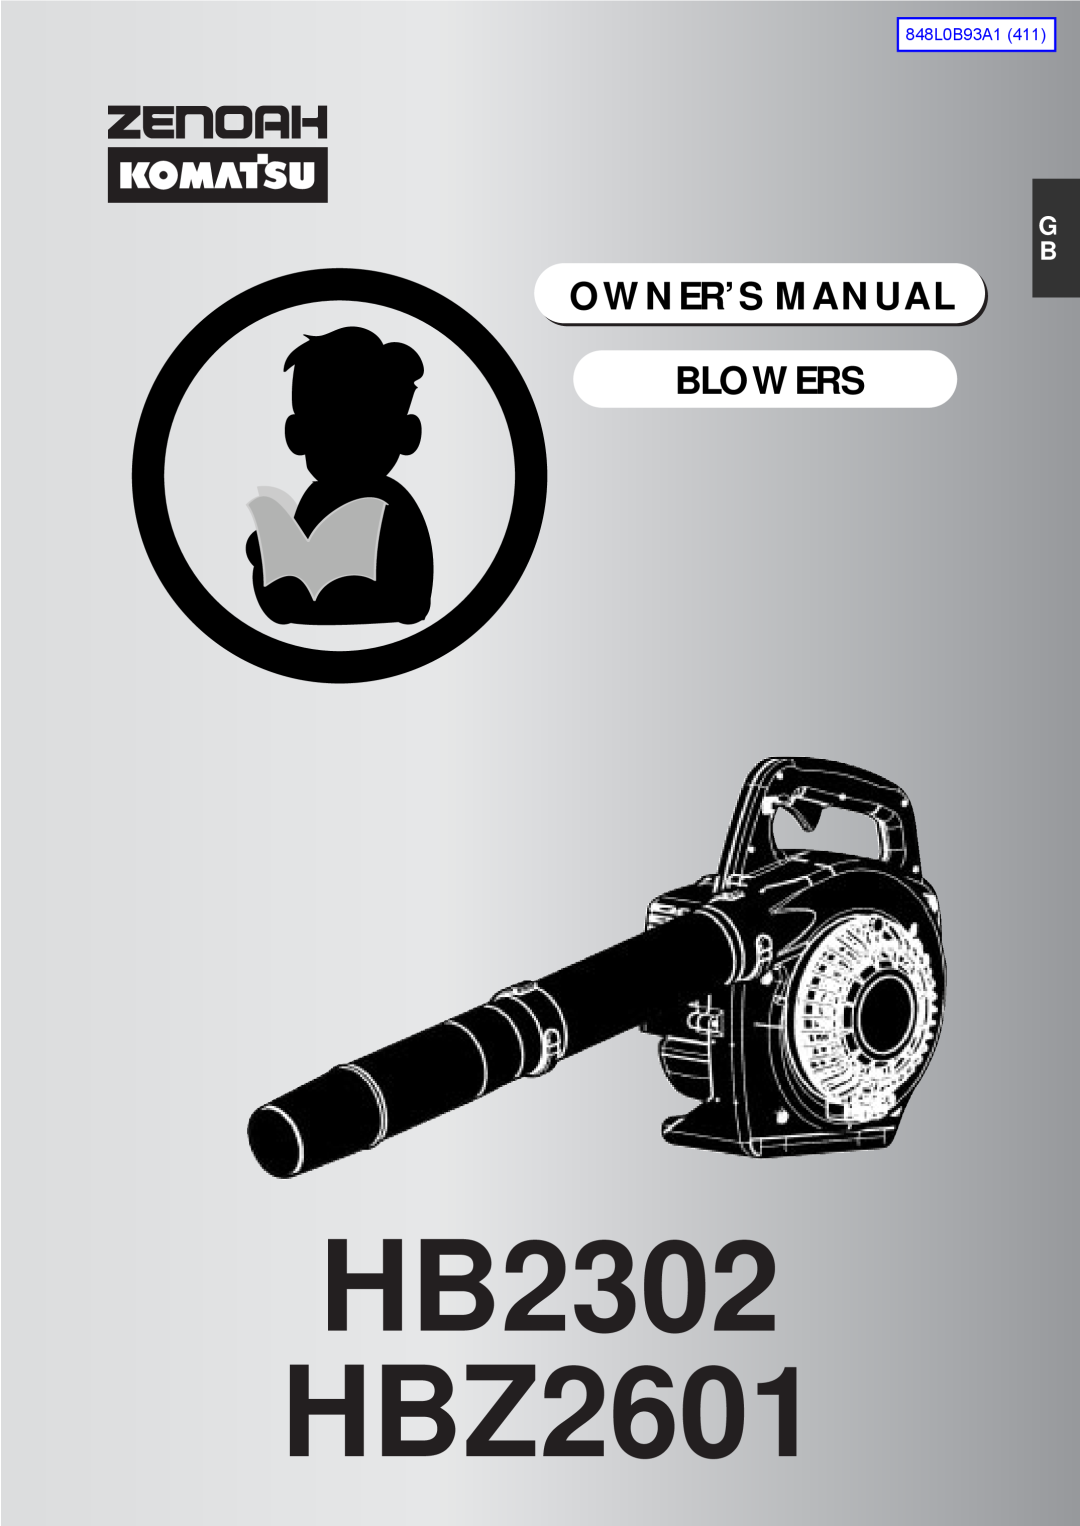 Zenoah owner manual HB2302 HBZ2601, 848L0B93A2 